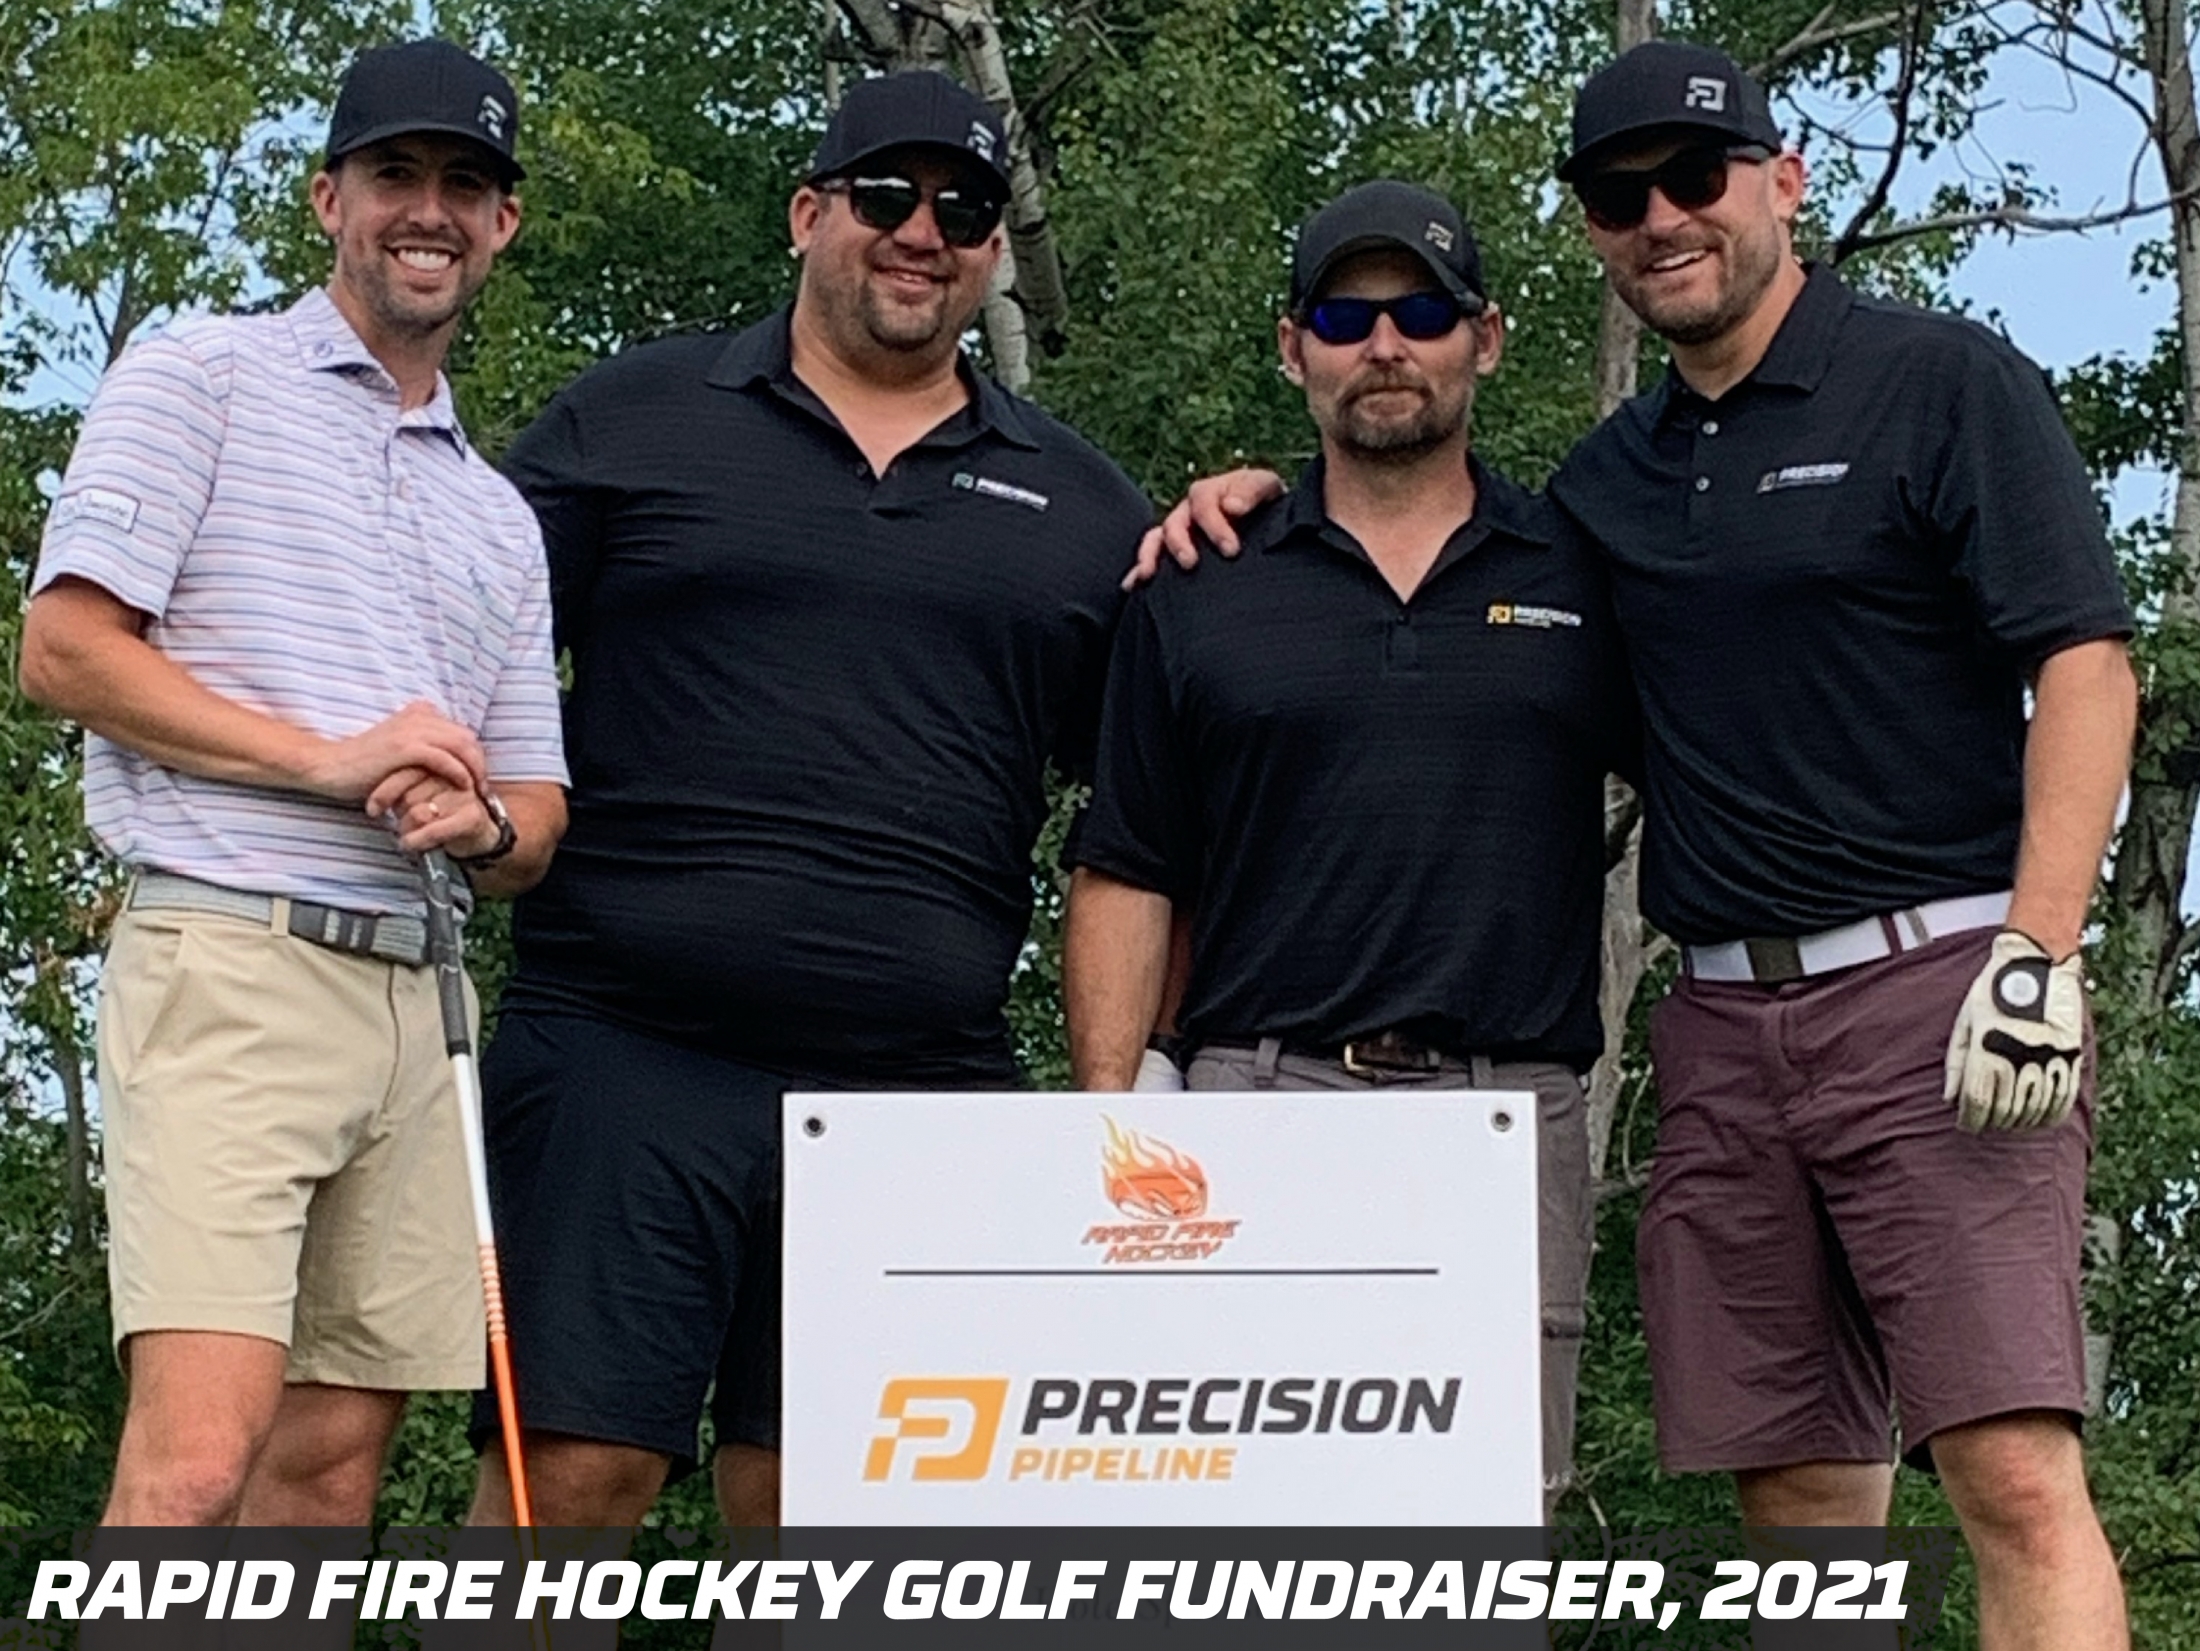 Precision Pipeline Community Involvement: Rapid Fire Hockey Golf Fundraiser 2021